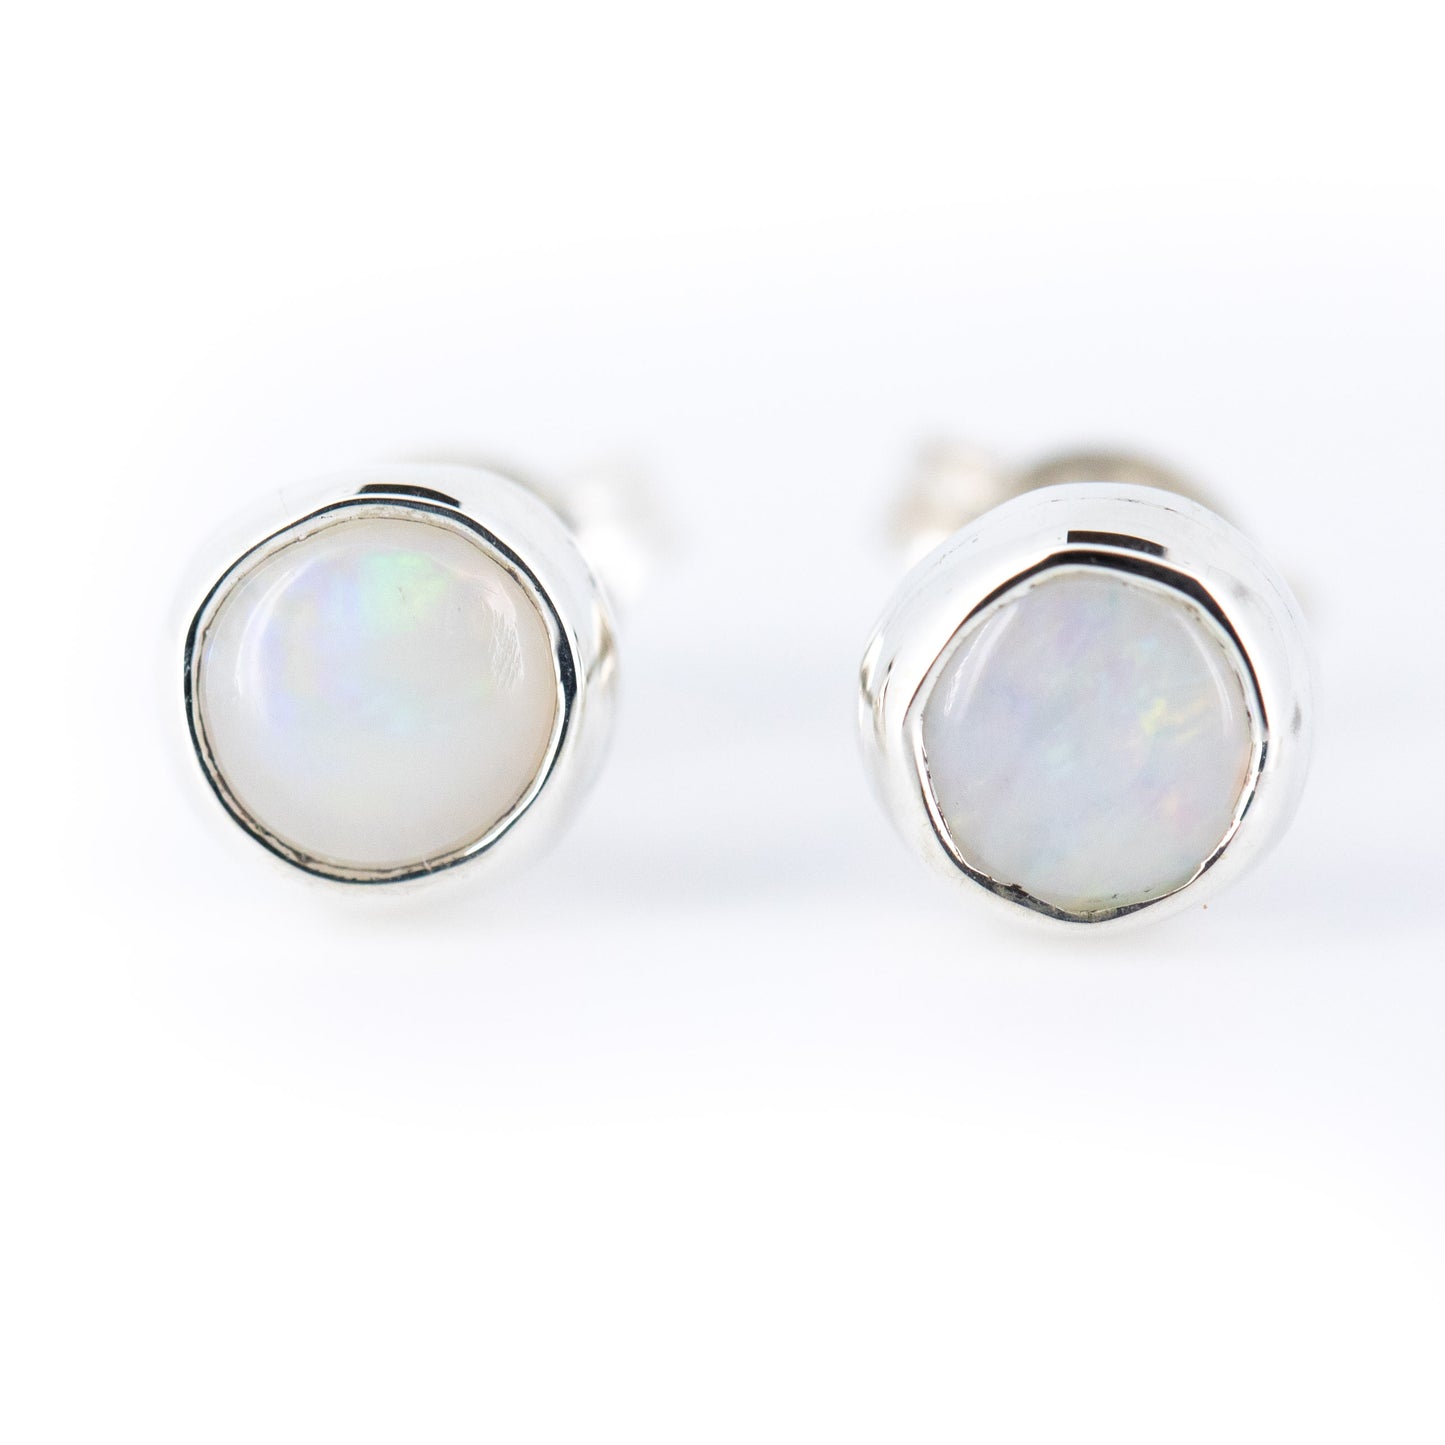 White Opal Silver Studs 5mm